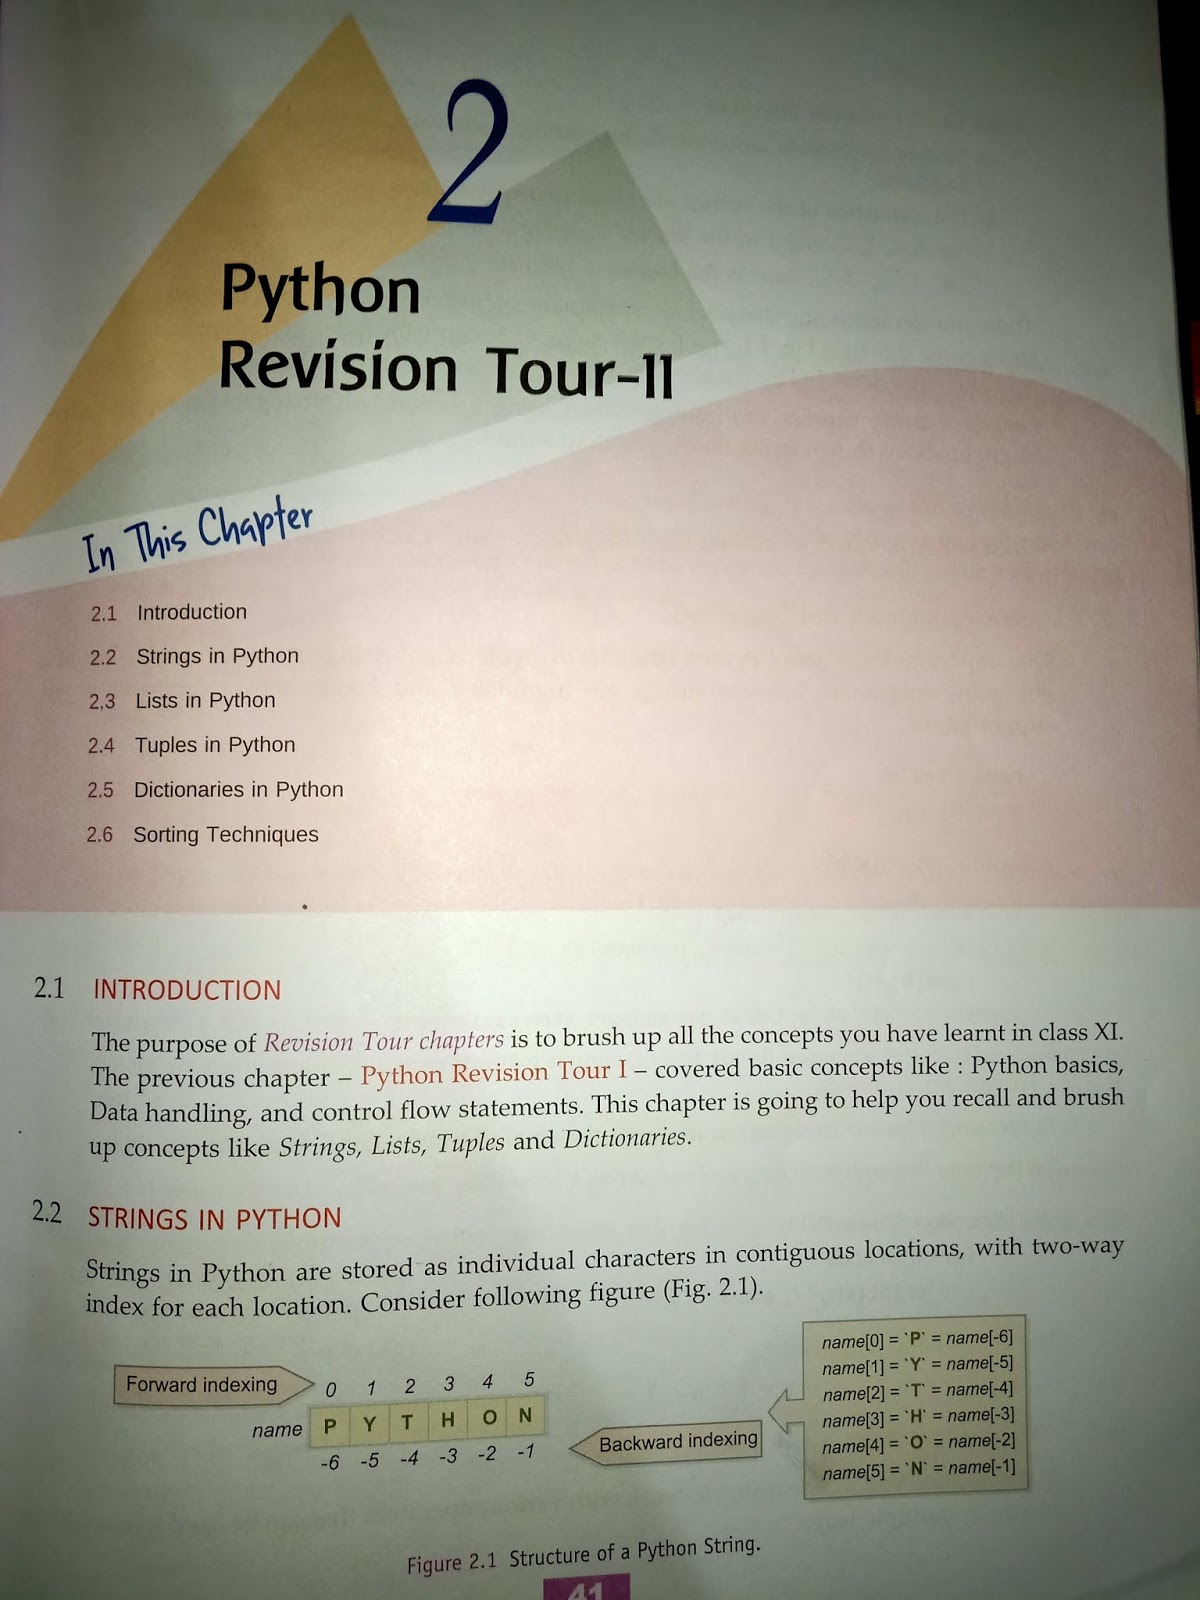 python revision tour class 12 pdf